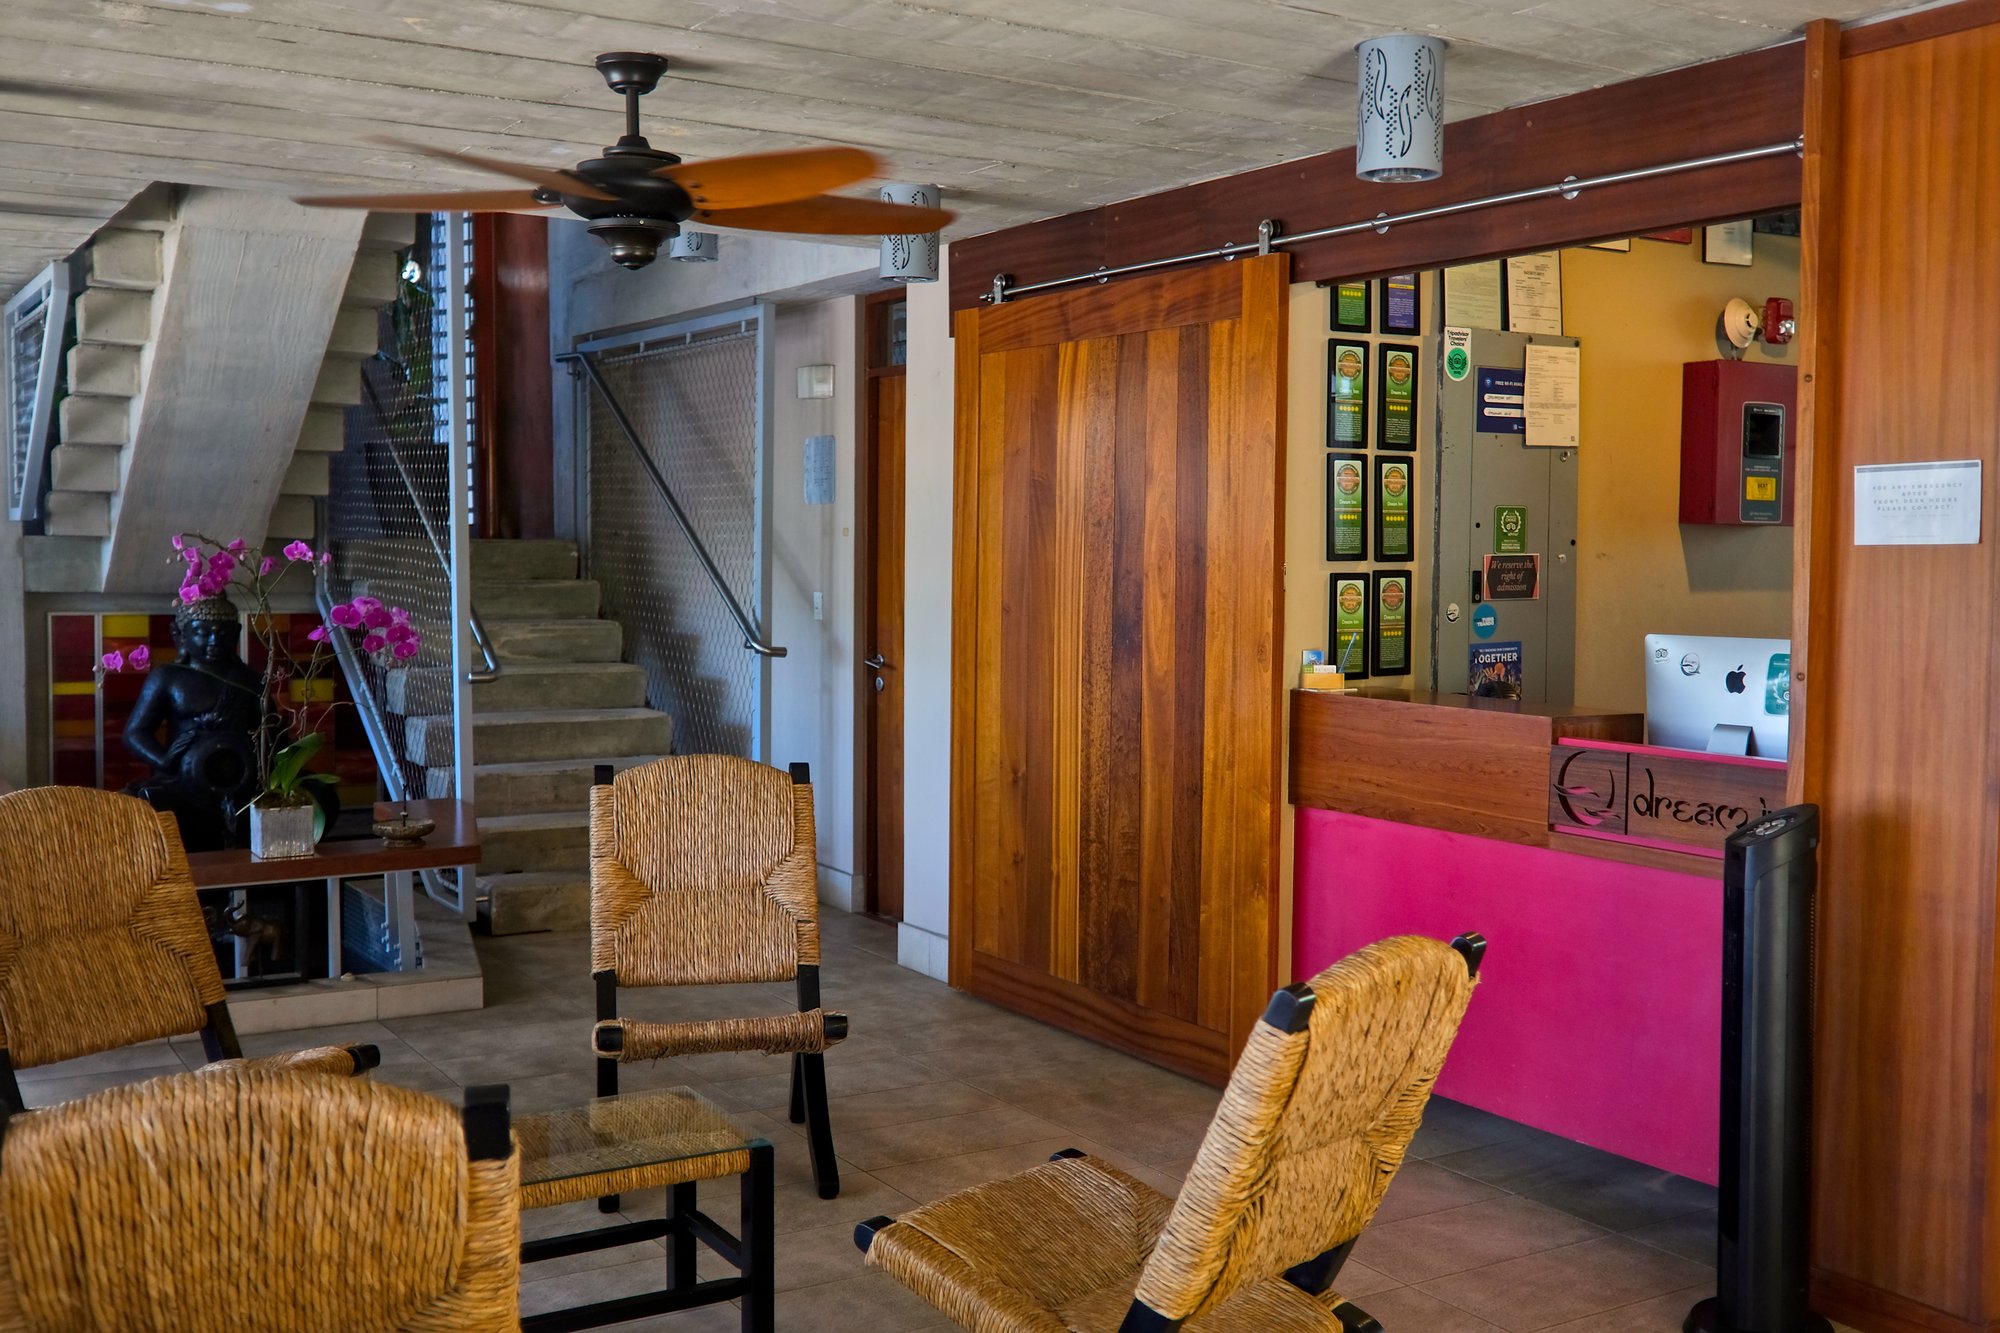 The lobby of Dream Inn in Puerto Rico